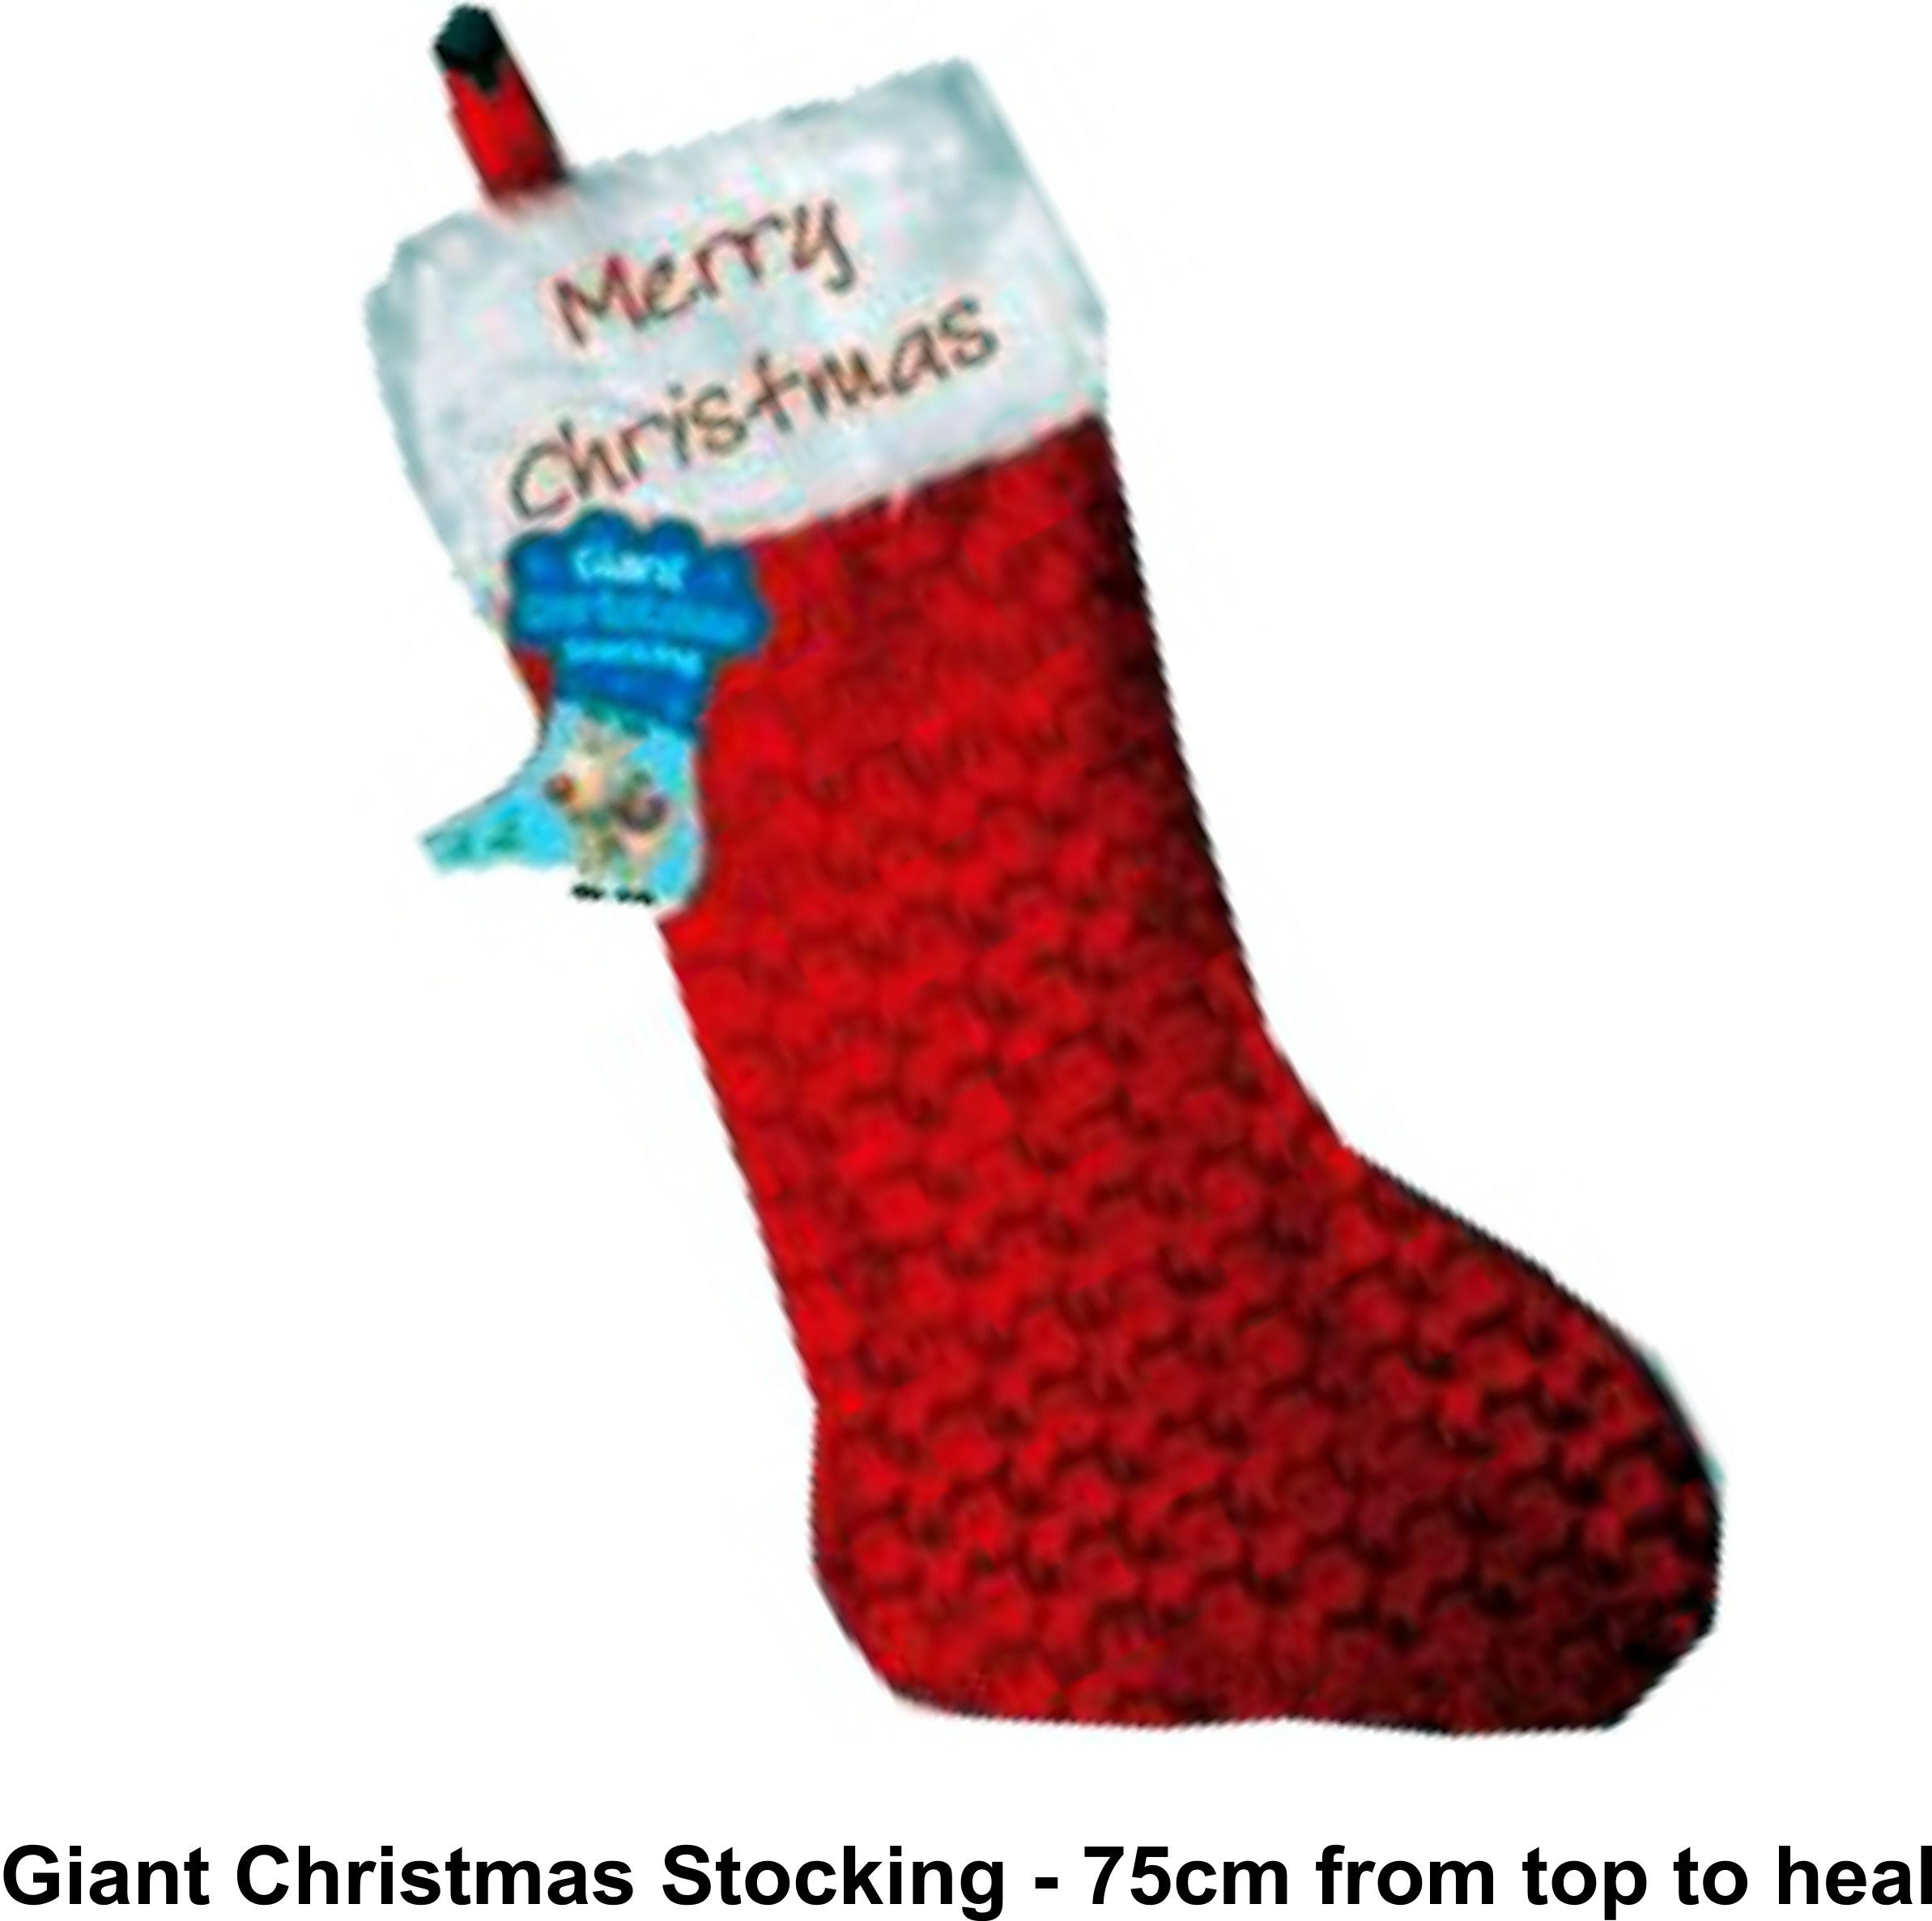 Giant Christmas Stocking